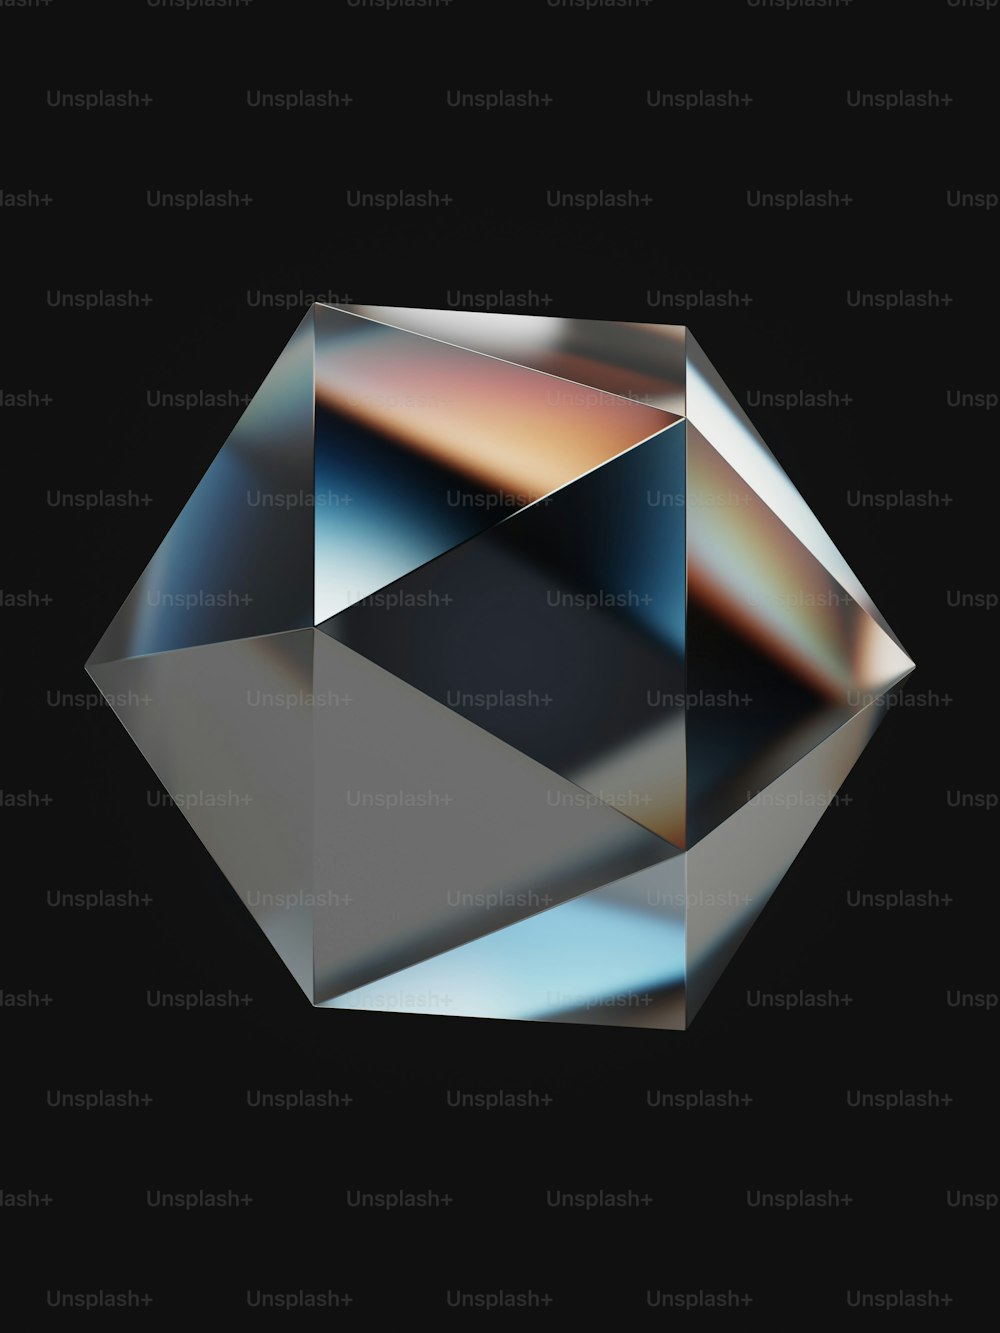 a diamond shaped object on a black background